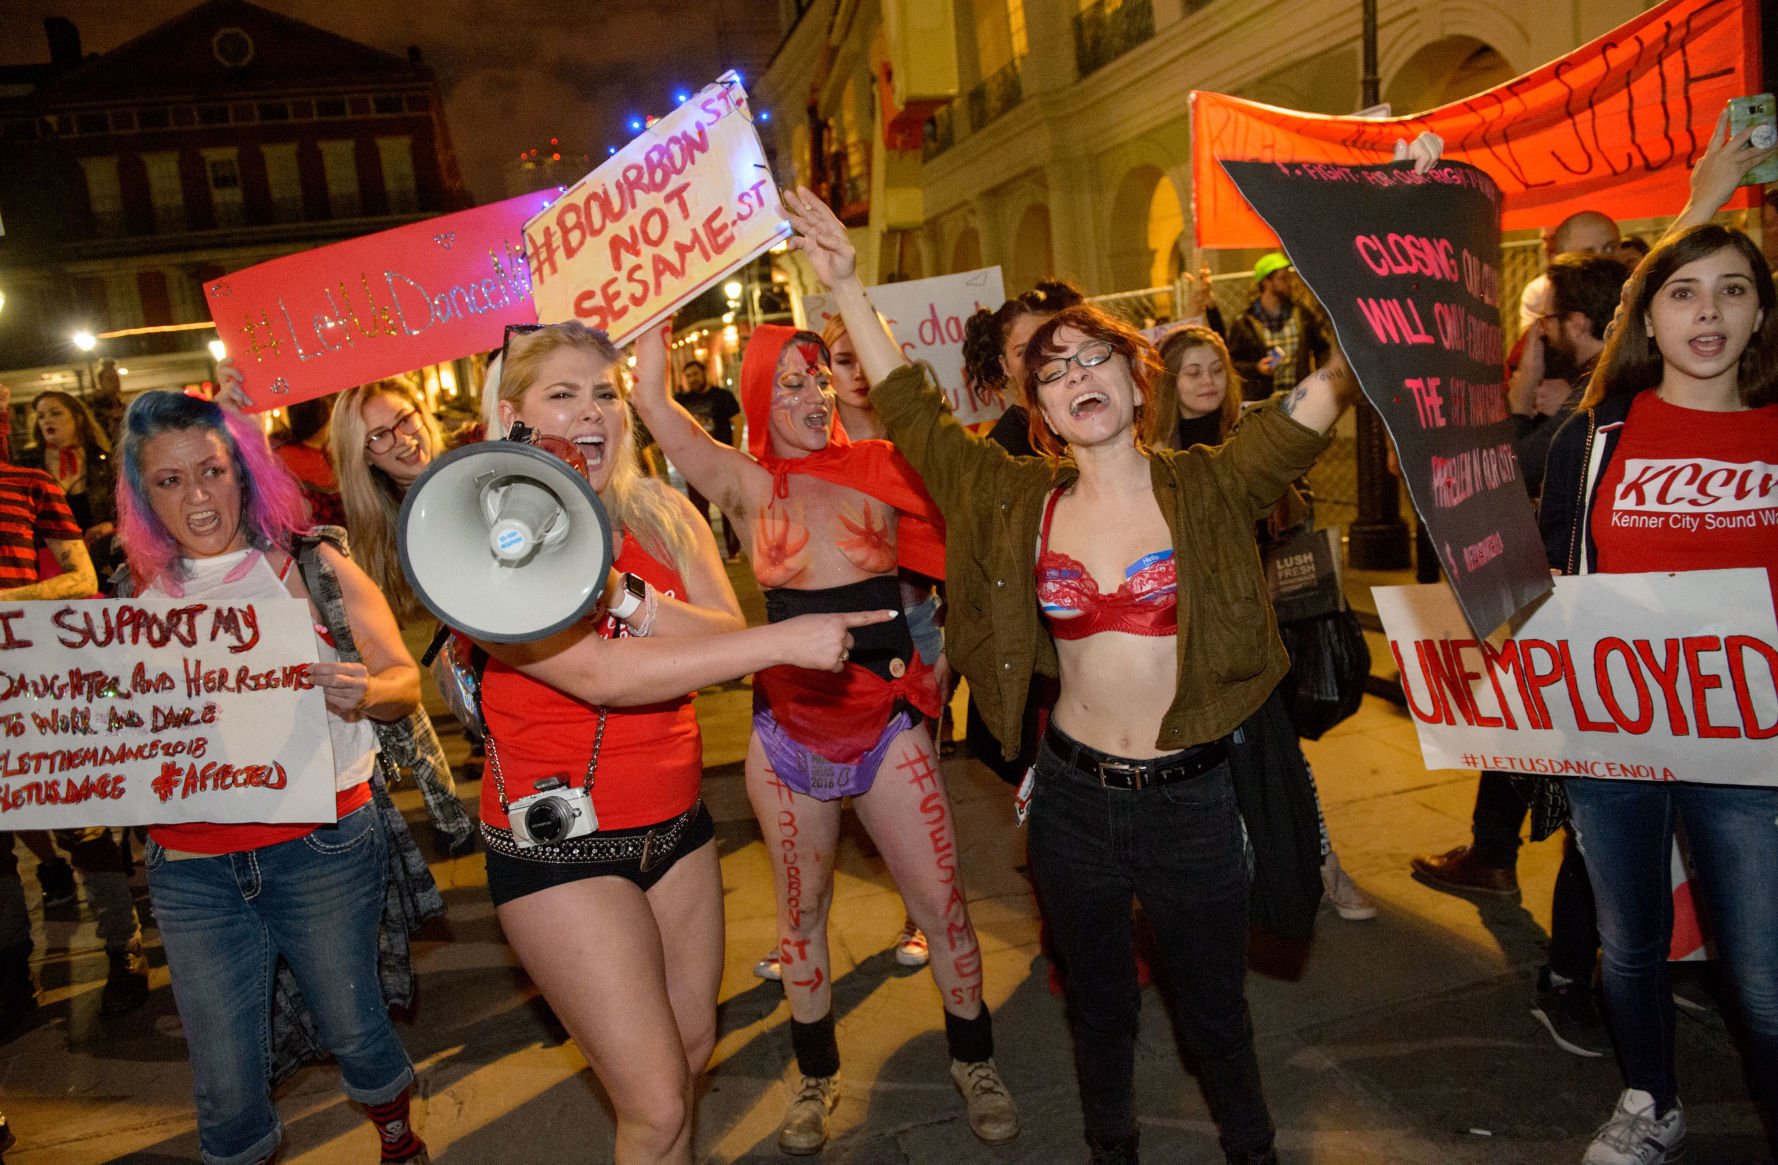 Prostitution decriminalized: Rhode Island’s experiment